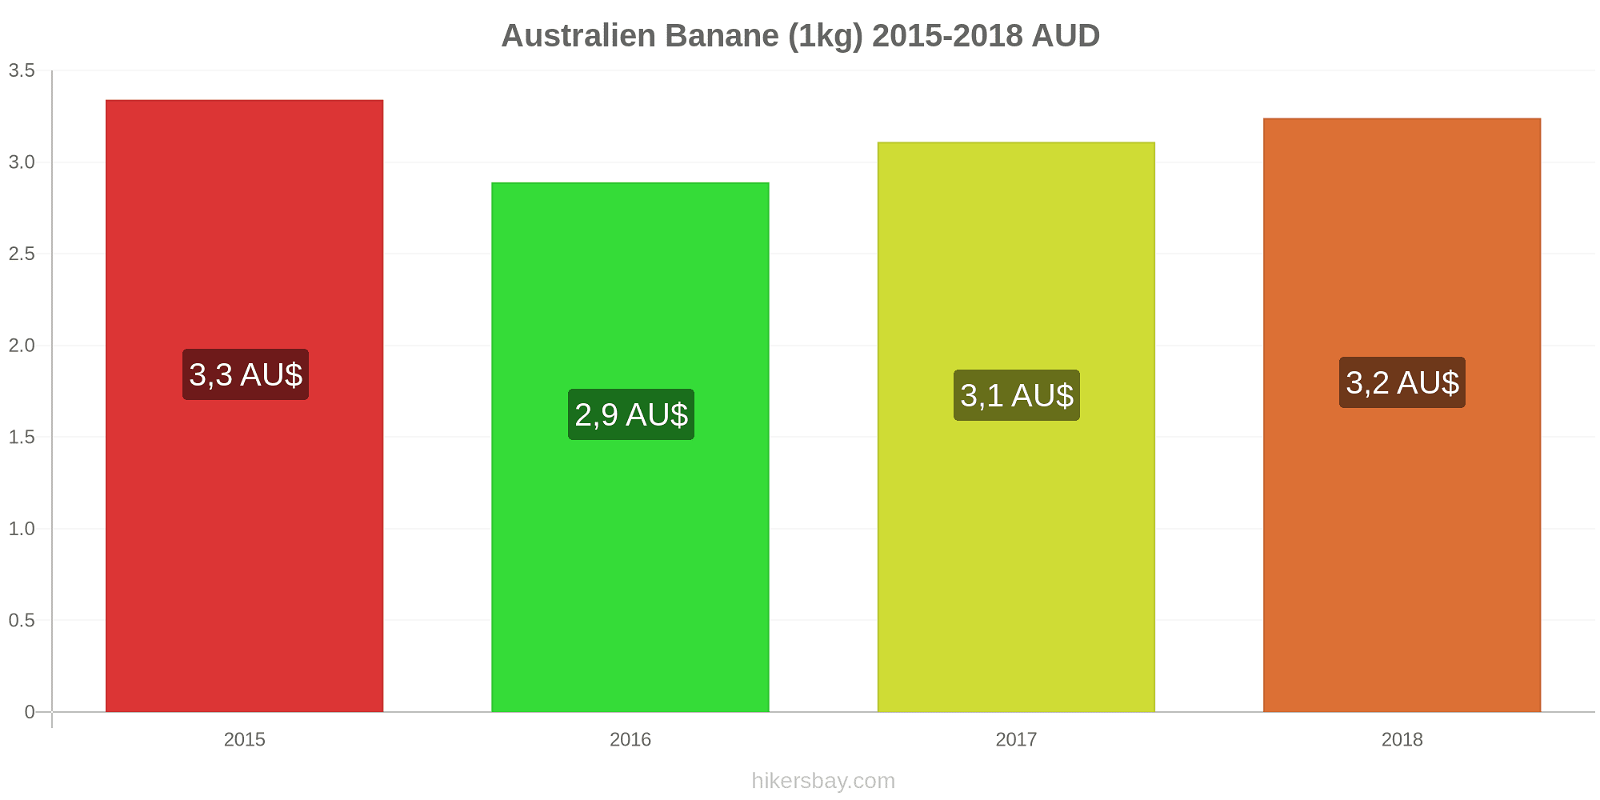 Australien Preisänderungen Bananen (1kg) hikersbay.com